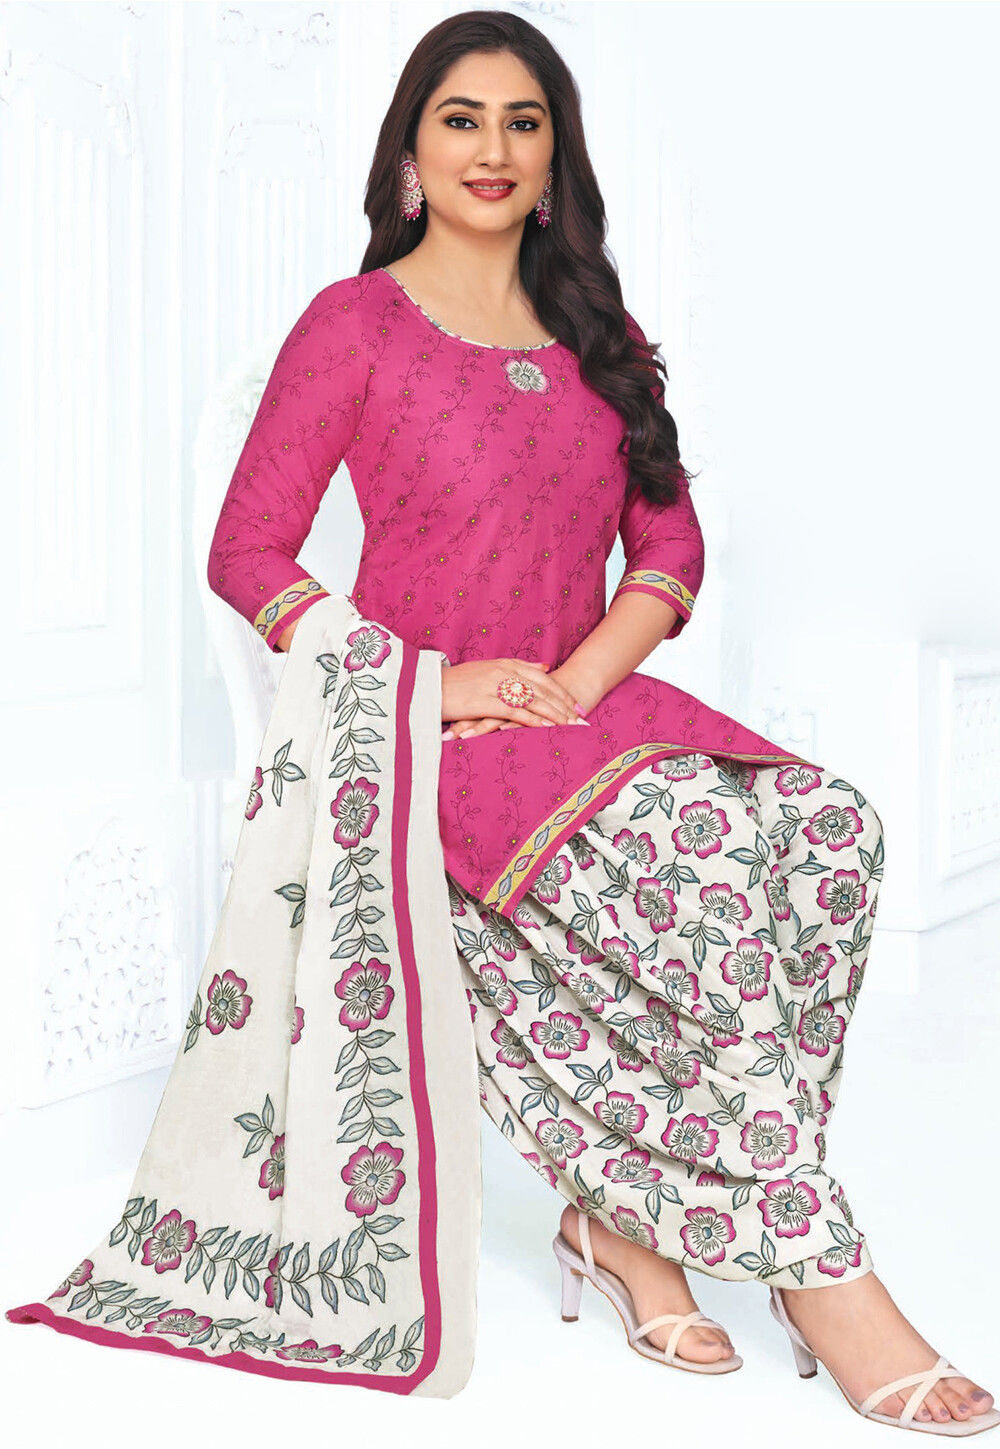 Floral Printed Cotton Punjabi Suit in Dark Pink : KHBZ1509